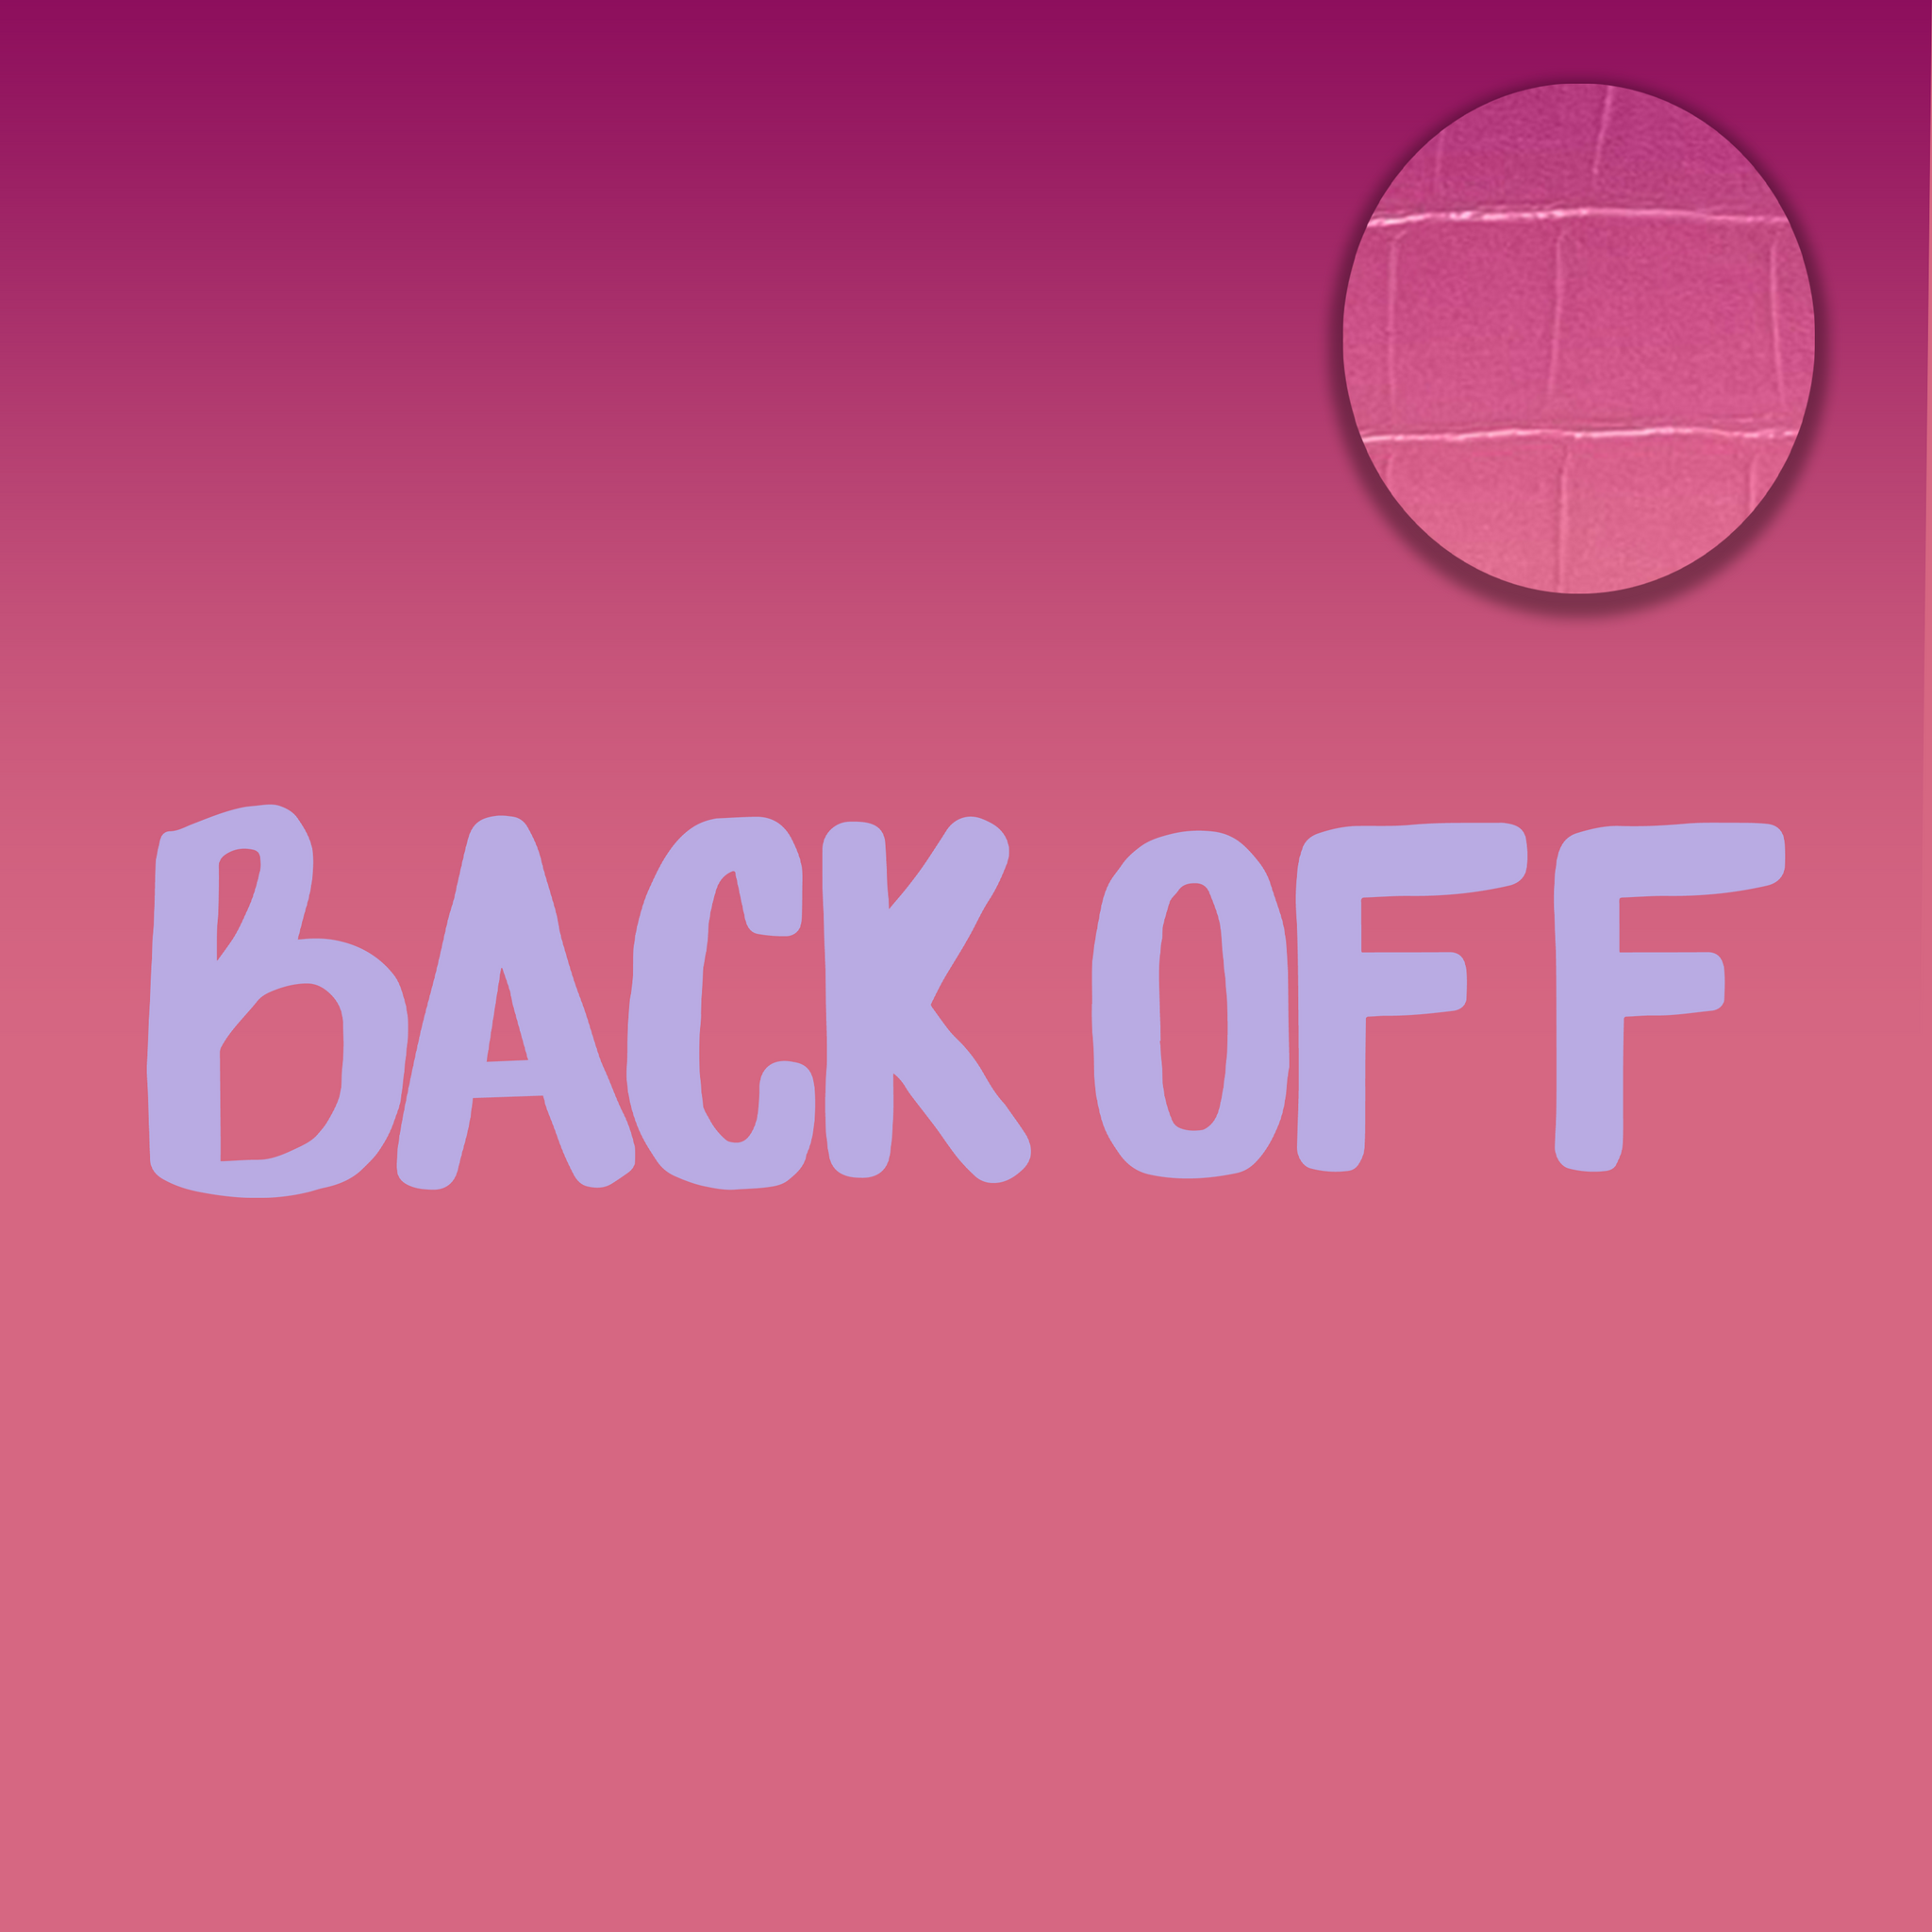 Back Off | Social Distancing